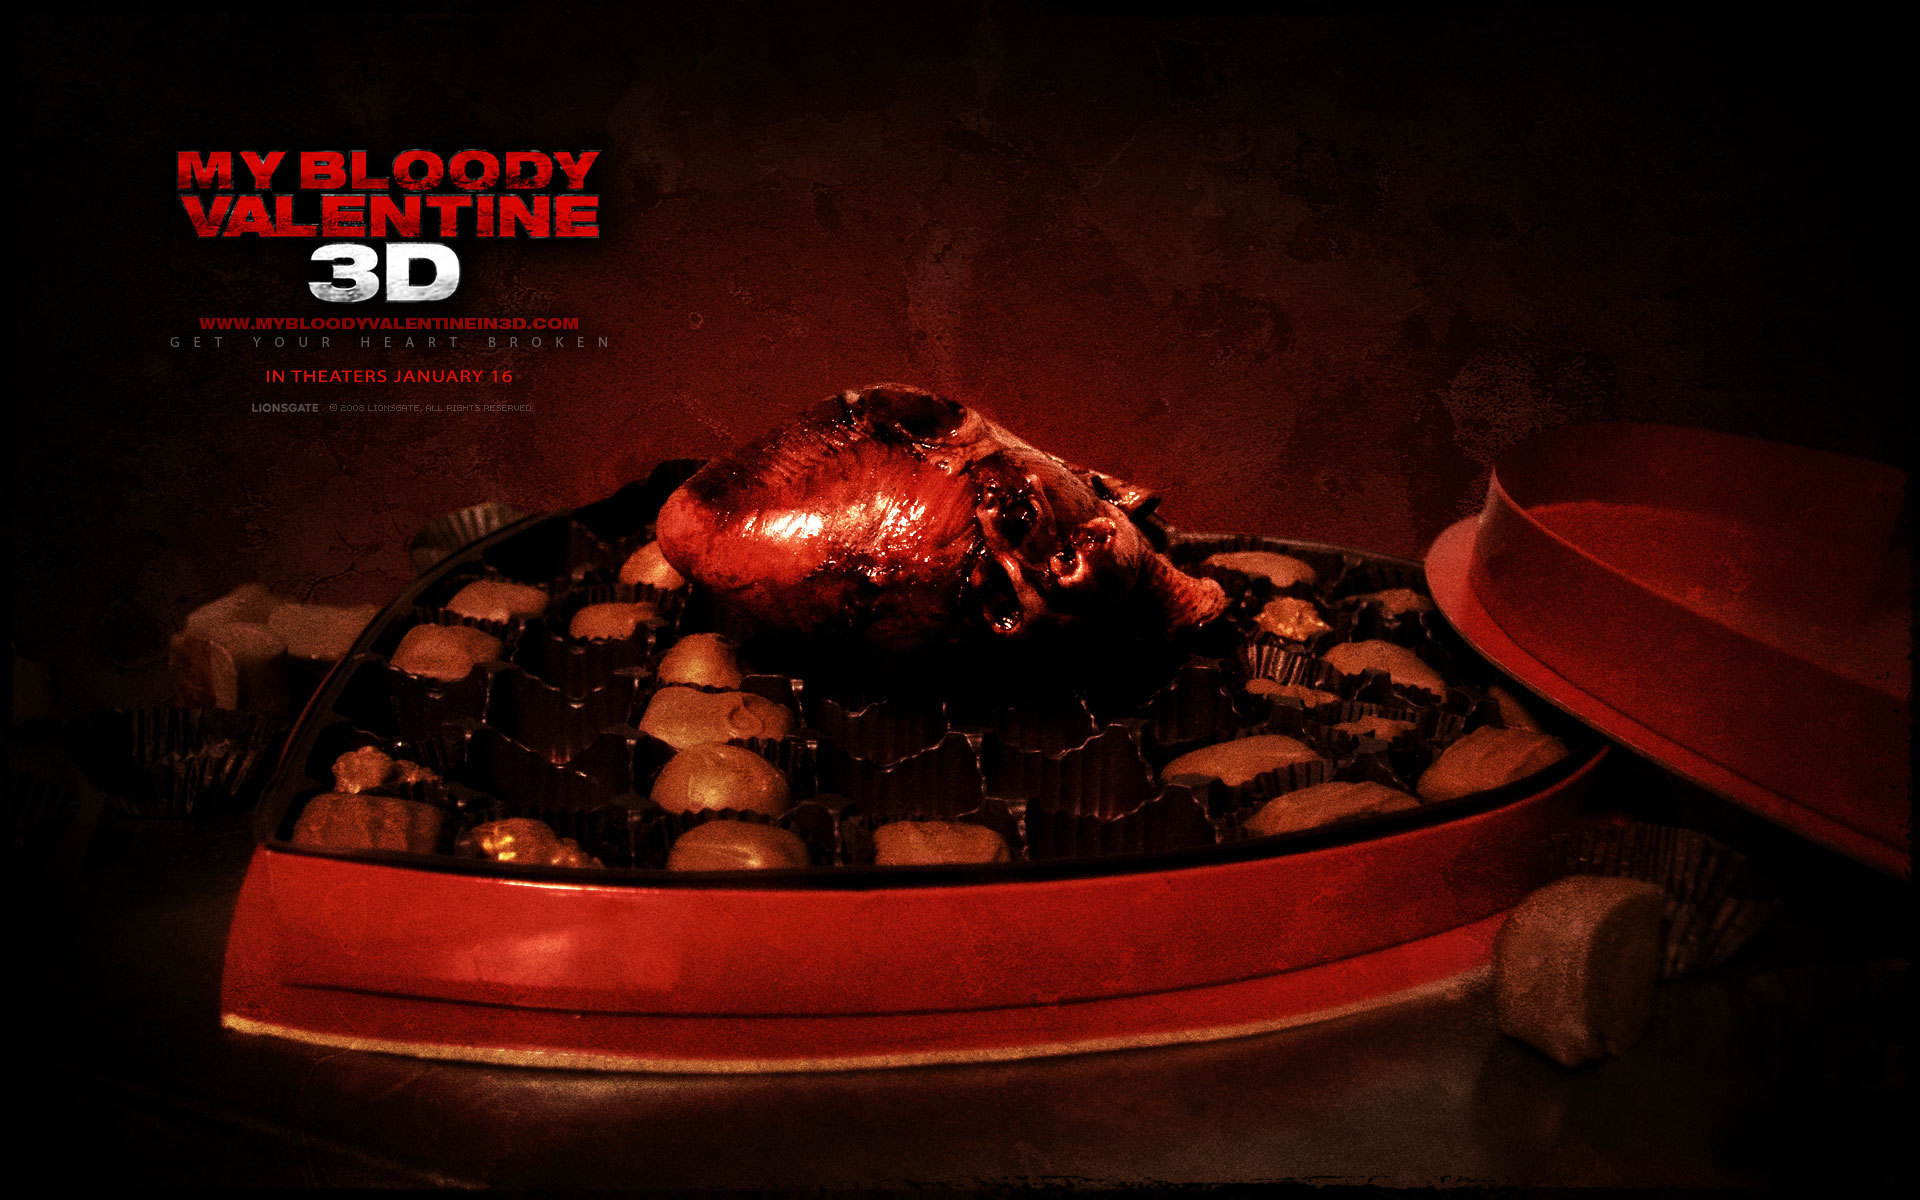 My Bloody Valentine 3D wallpapers - Horror Movies Wallpaper (3324327) -  Fanpop